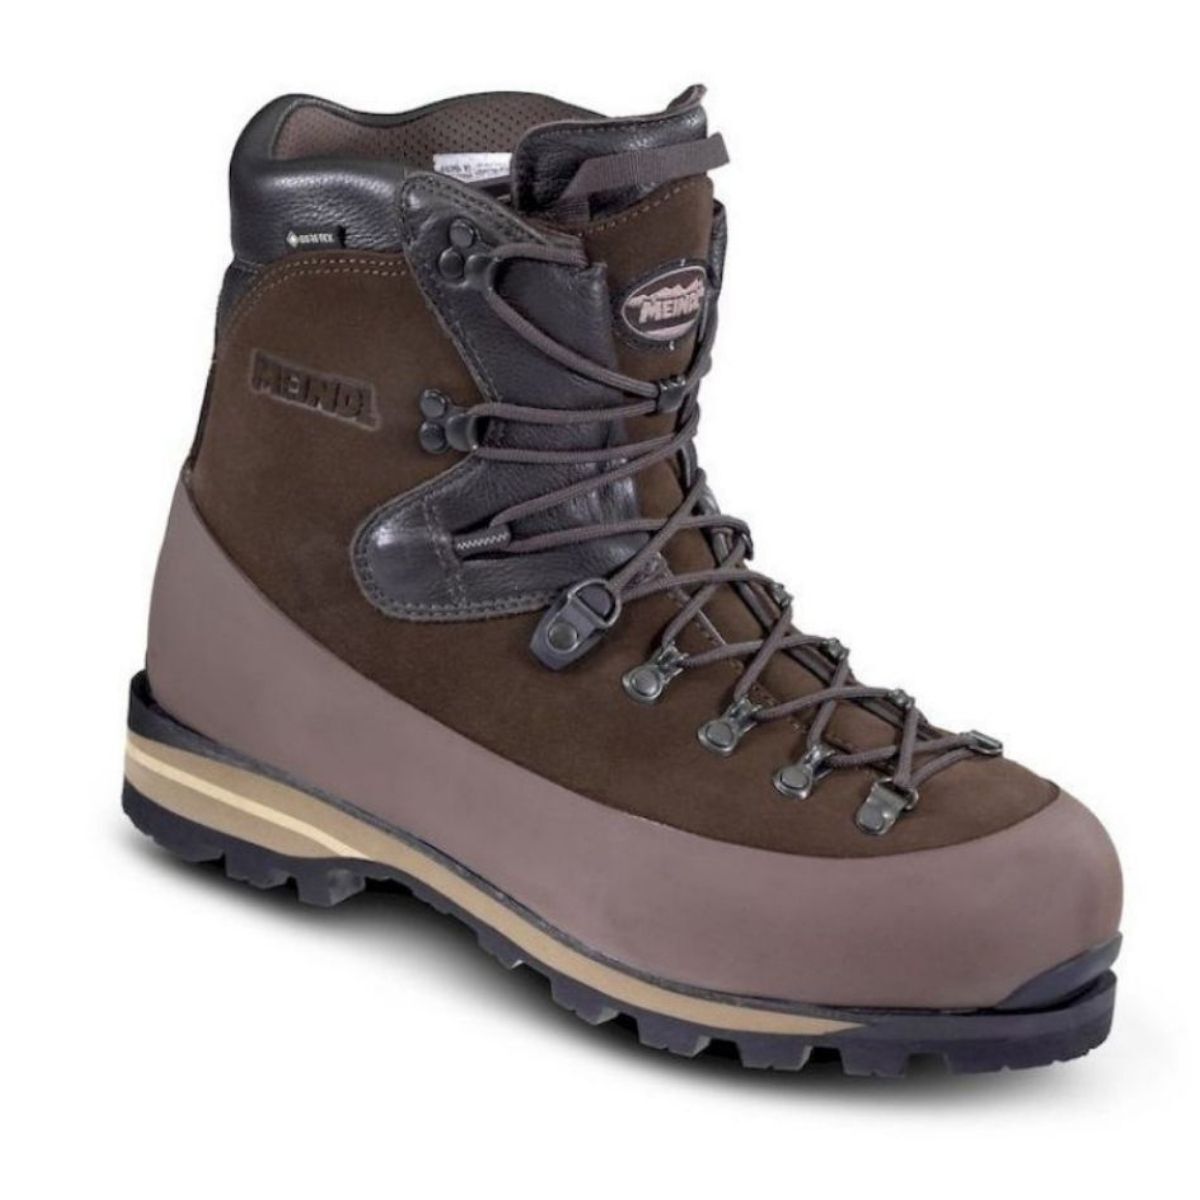 Meindl Alta Rocca PRO GTX - Mountaineering boots - Men's